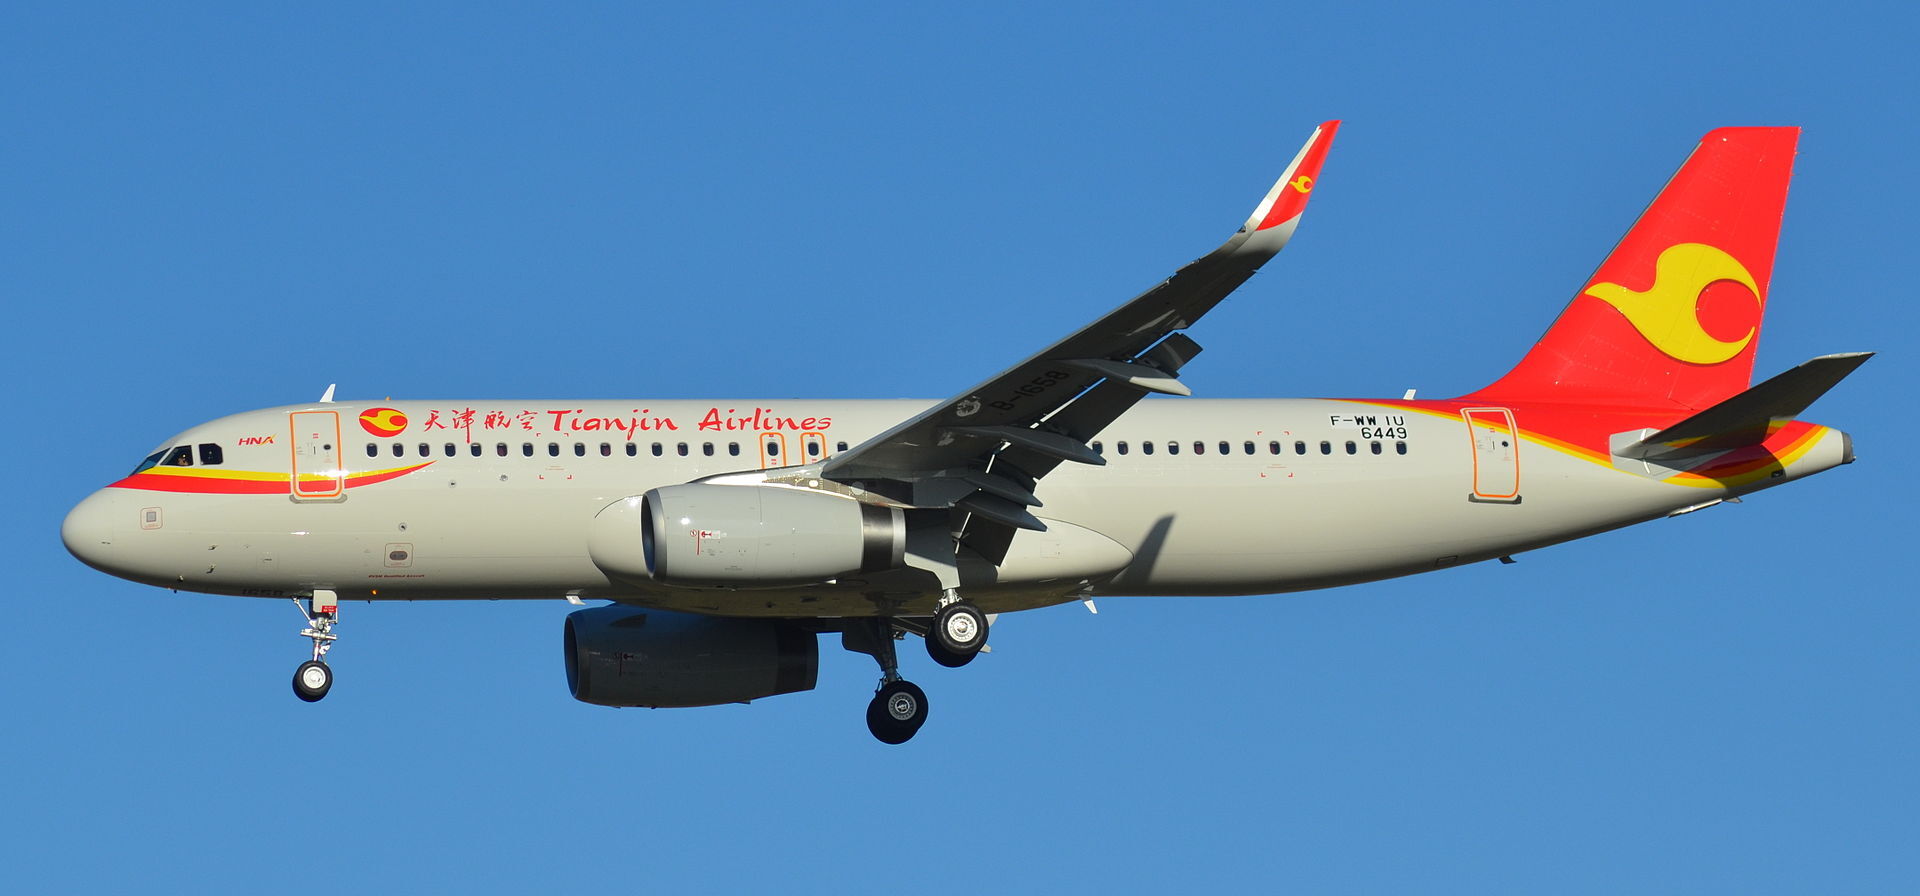 Günstige Flüge ✈️ Tianjin Airlines (GS)